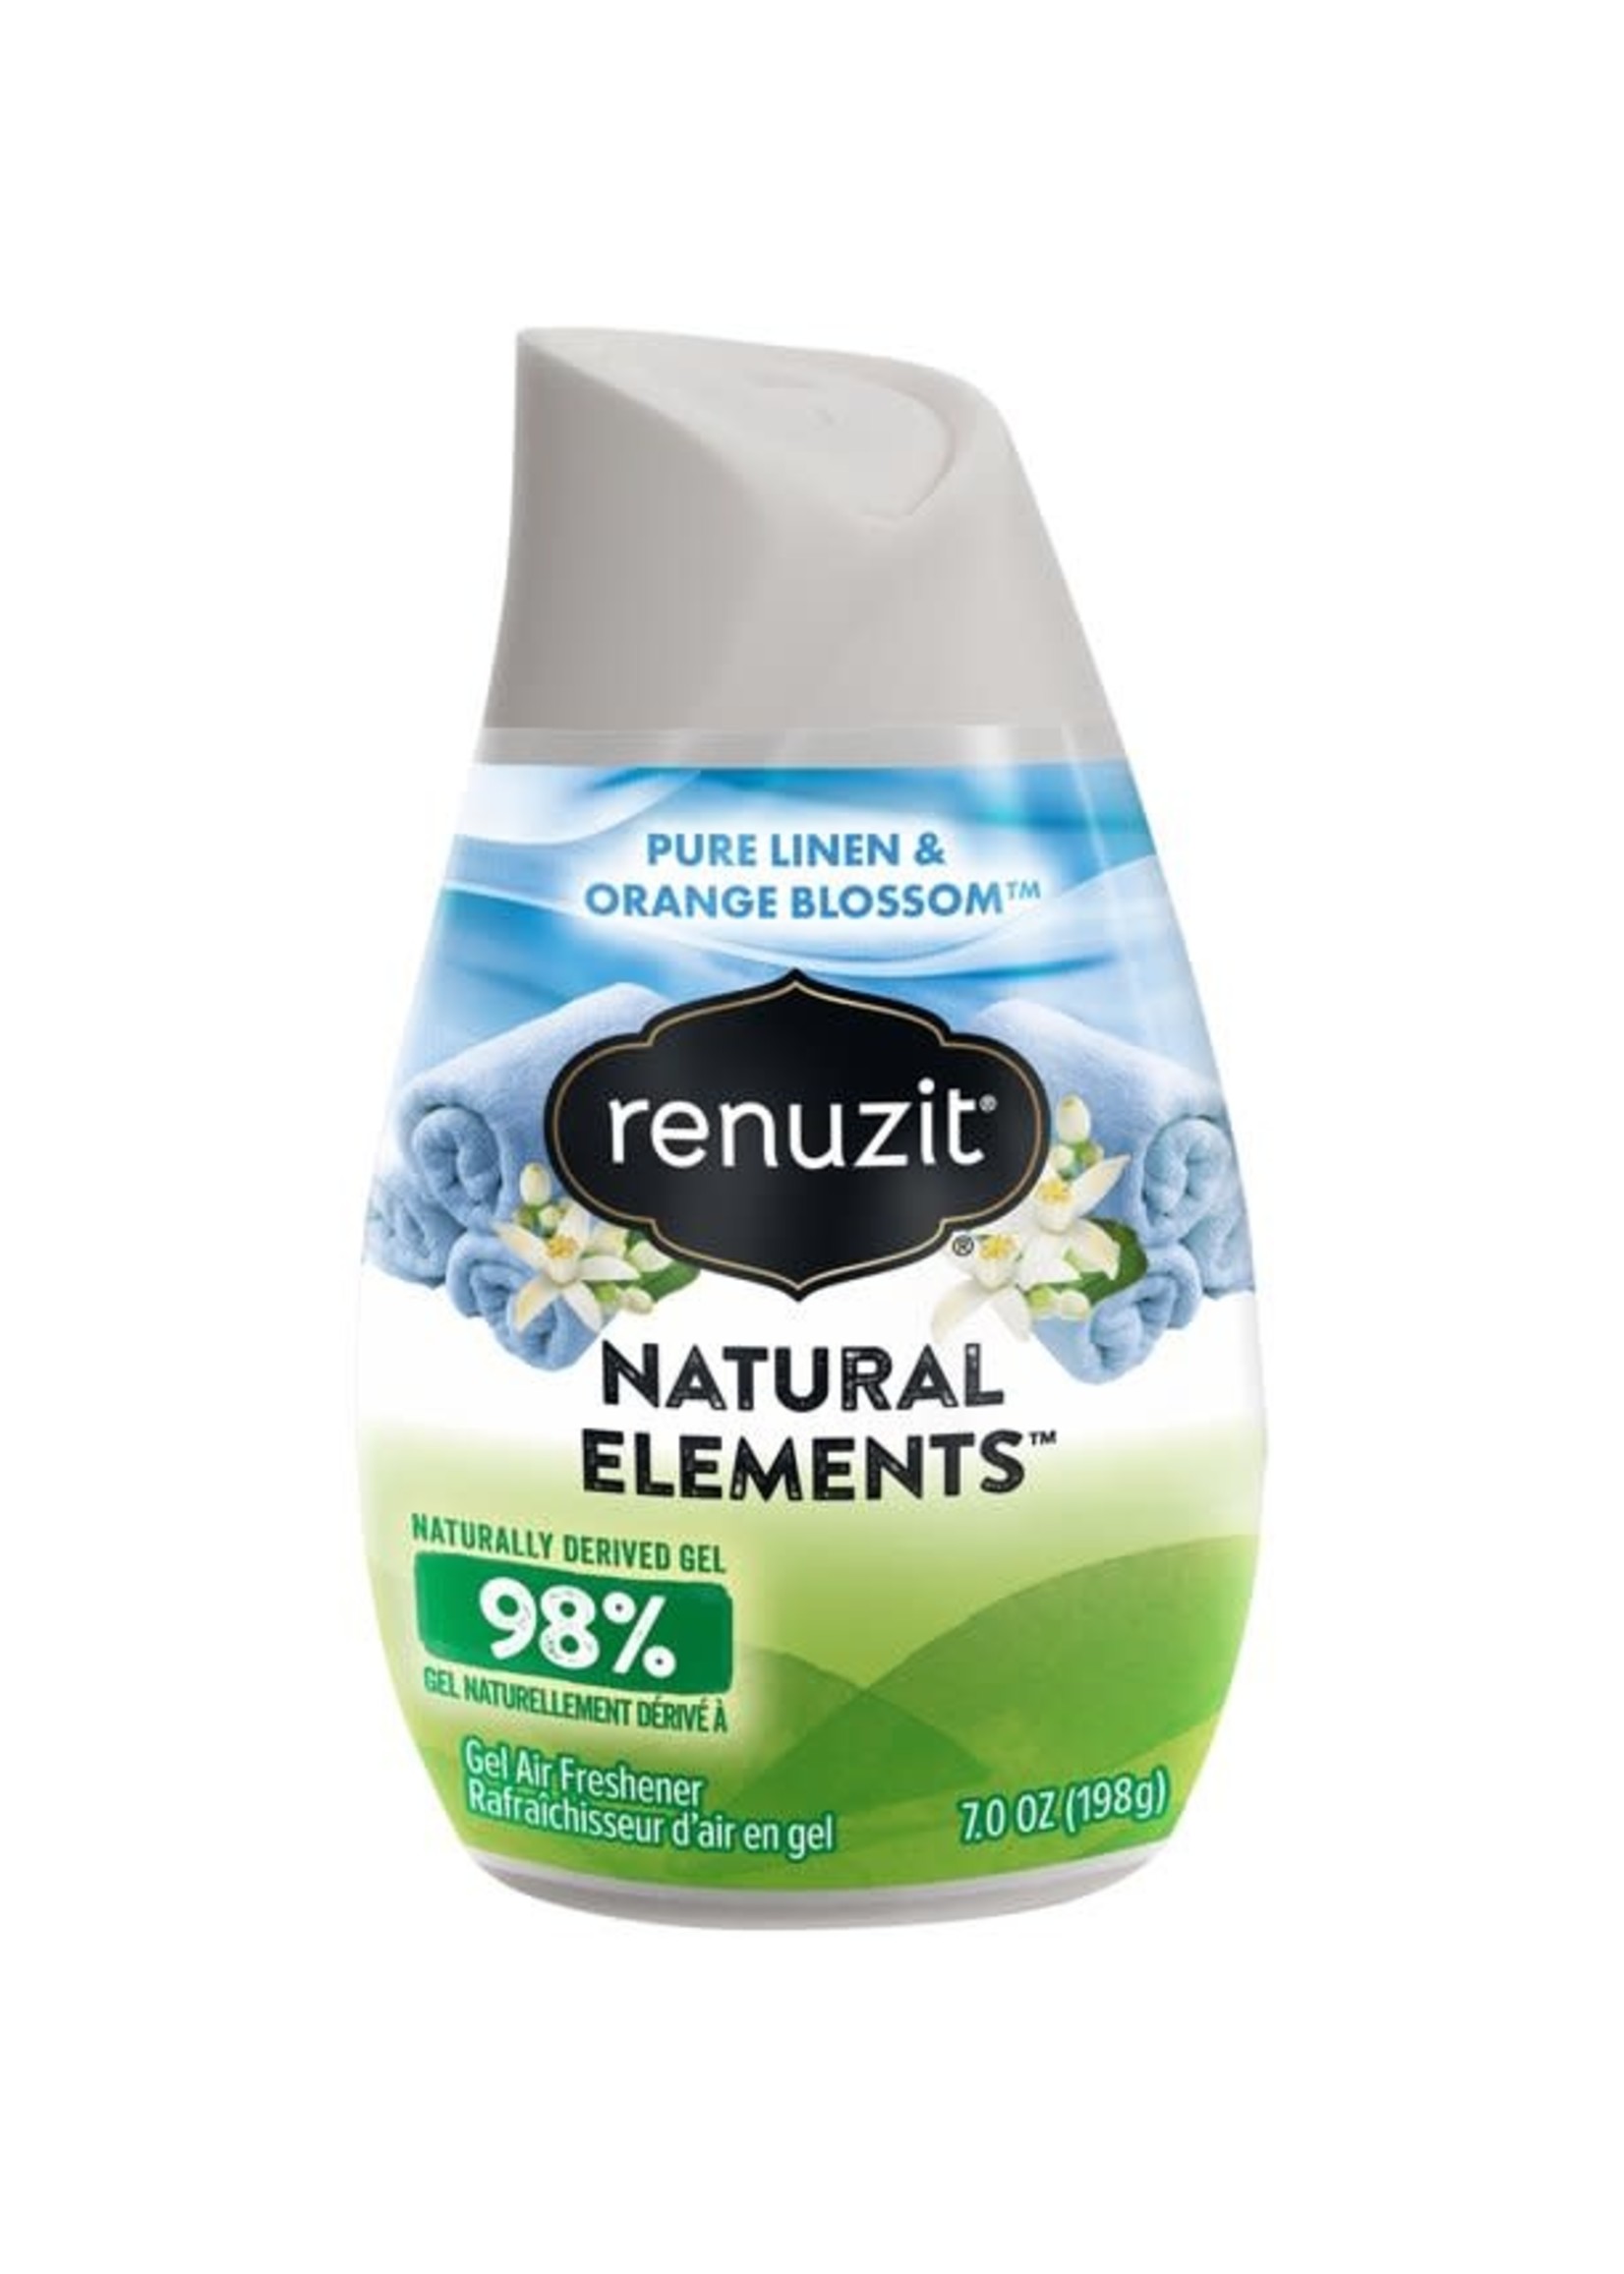 Renuzit Natural Elements Gel Air Freshener, Pure Linen & Orange Blossom 7oz - 12/case ($11.88)